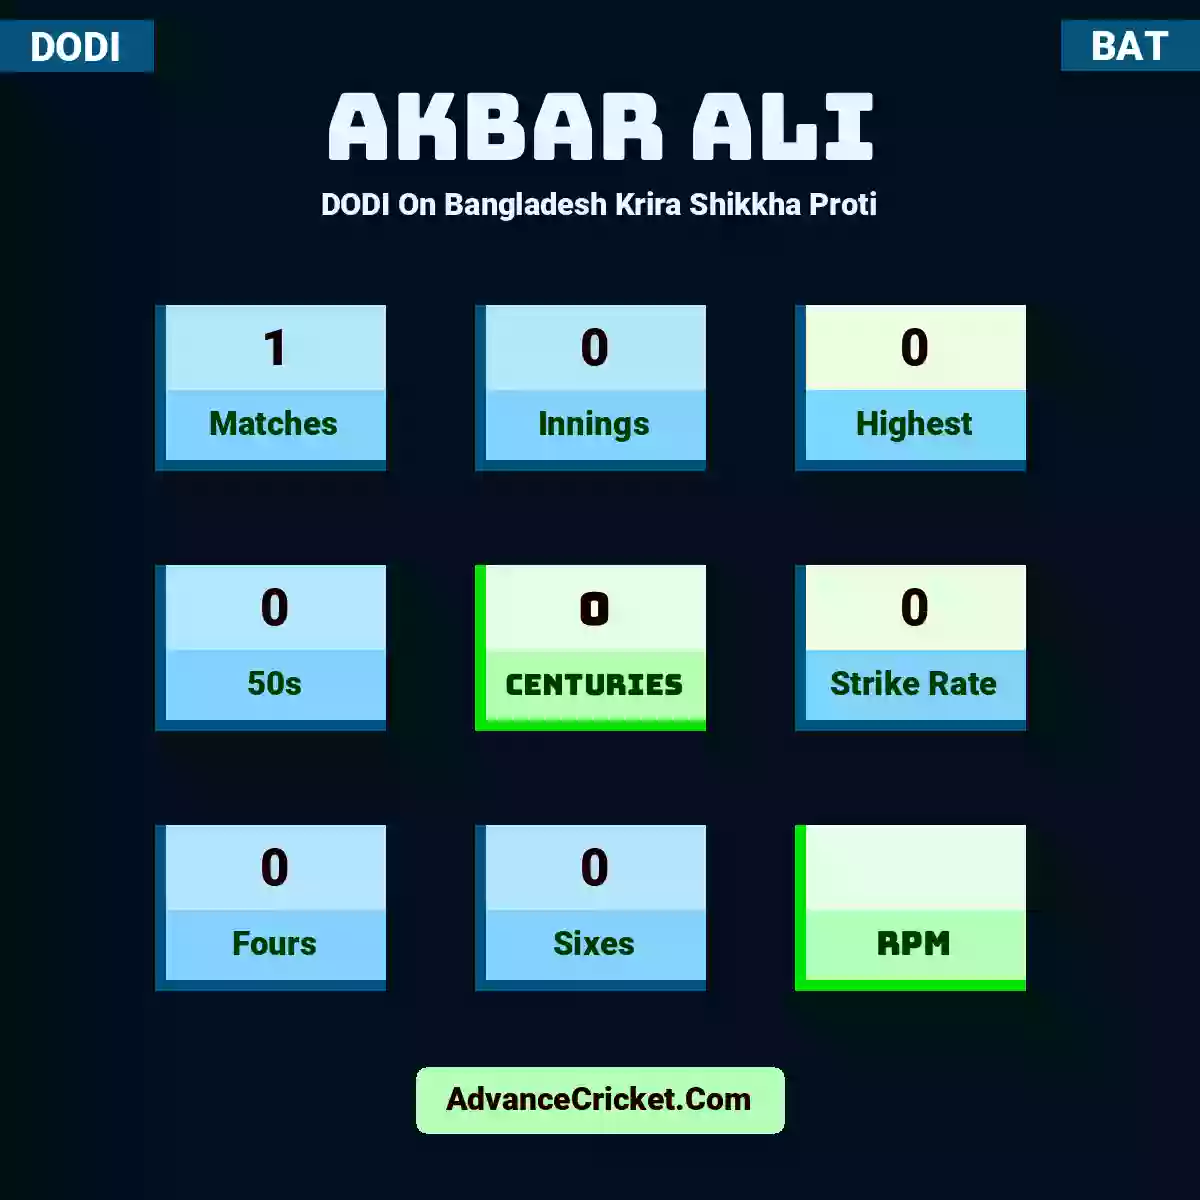 Akbar Ali DODI  On Bangladesh Krira Shikkha Proti, Akbar Ali played 1 matches, scored 0 runs as highest, 0 half-centuries, and 0 centuries, with a strike rate of 0. A.Ali hit 0 fours and 0 sixes.